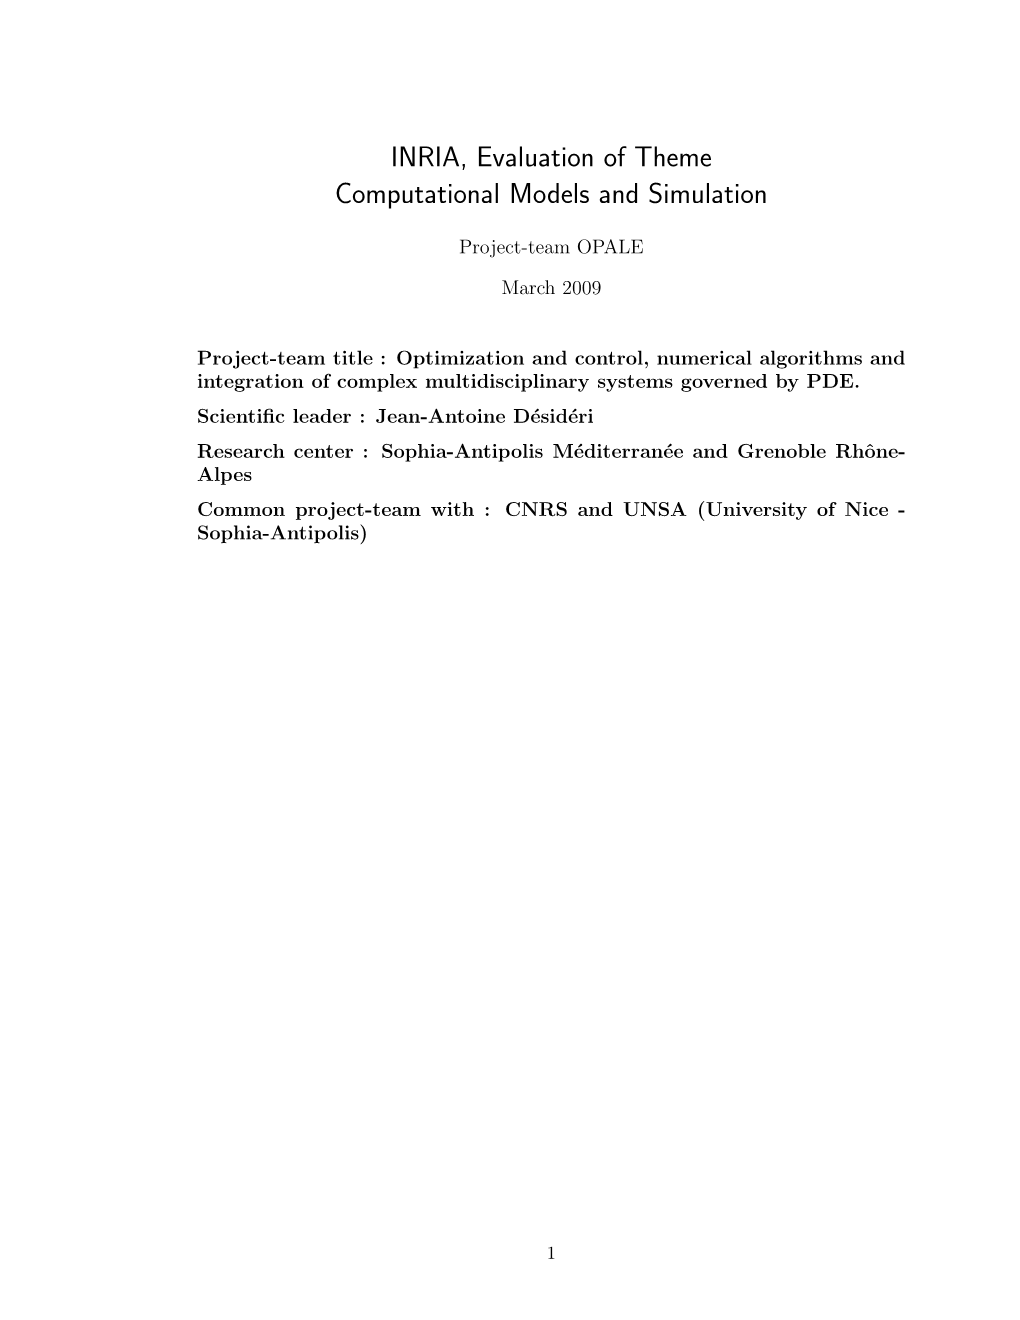 INRIA, Evaluation of Theme Computational Models and Simulation